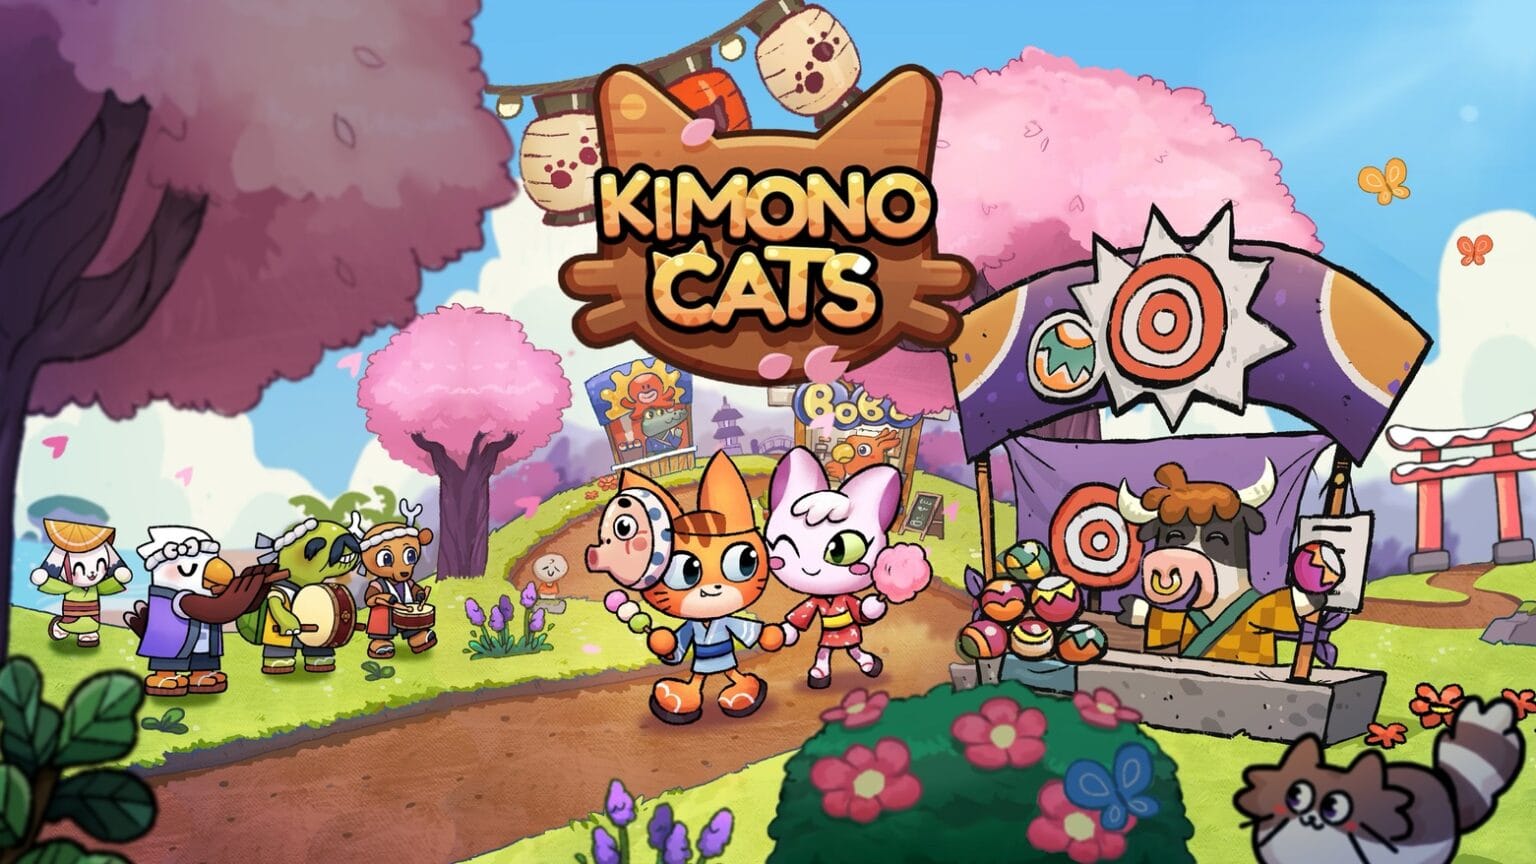 Enjoy some light, charming fun with 'Kimono Cats'